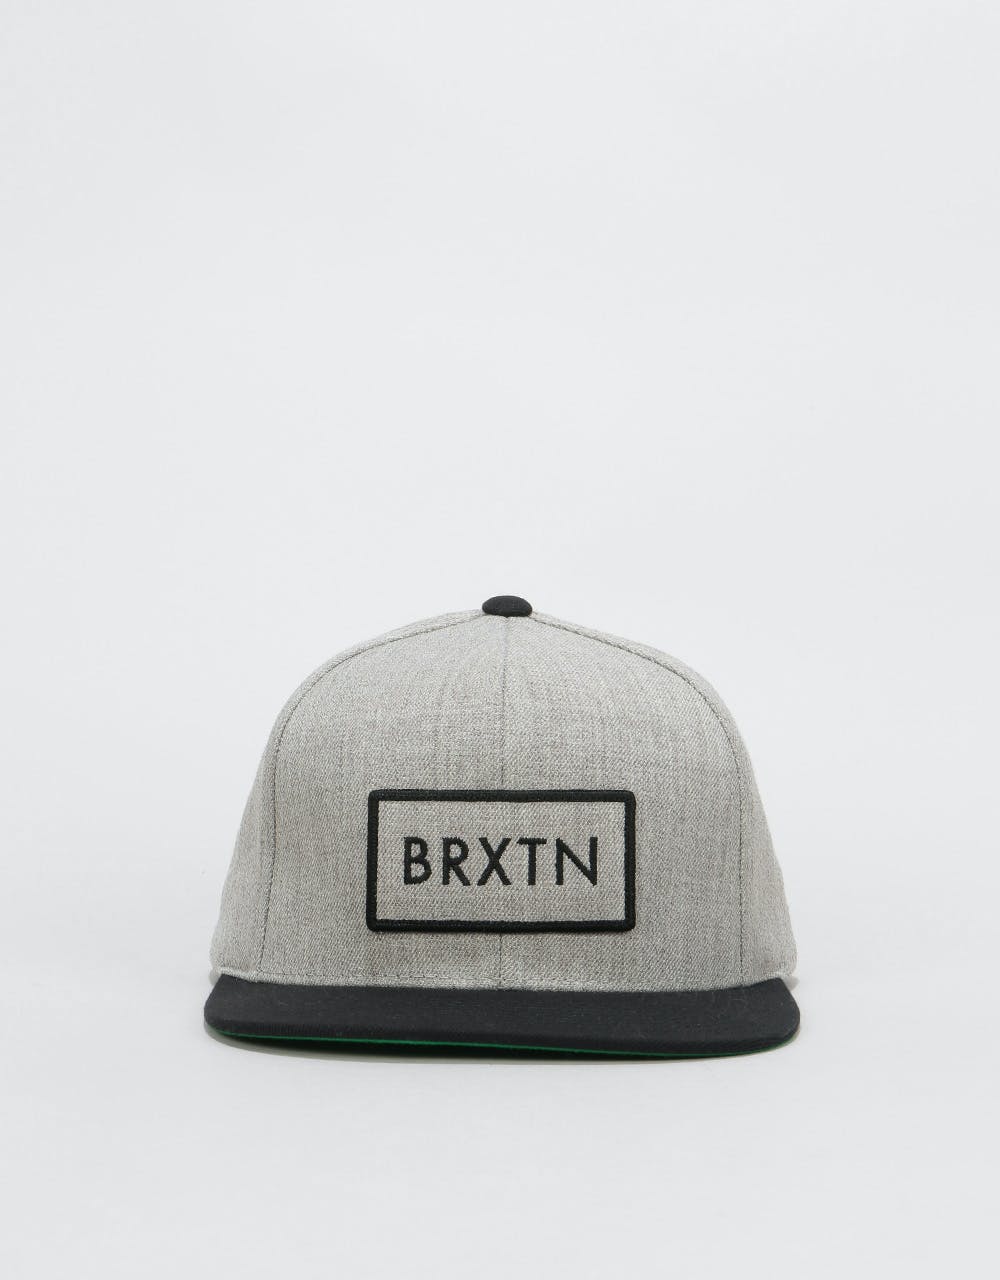 Brixton Rift Snapback Cap - Light Heather Grey/Black